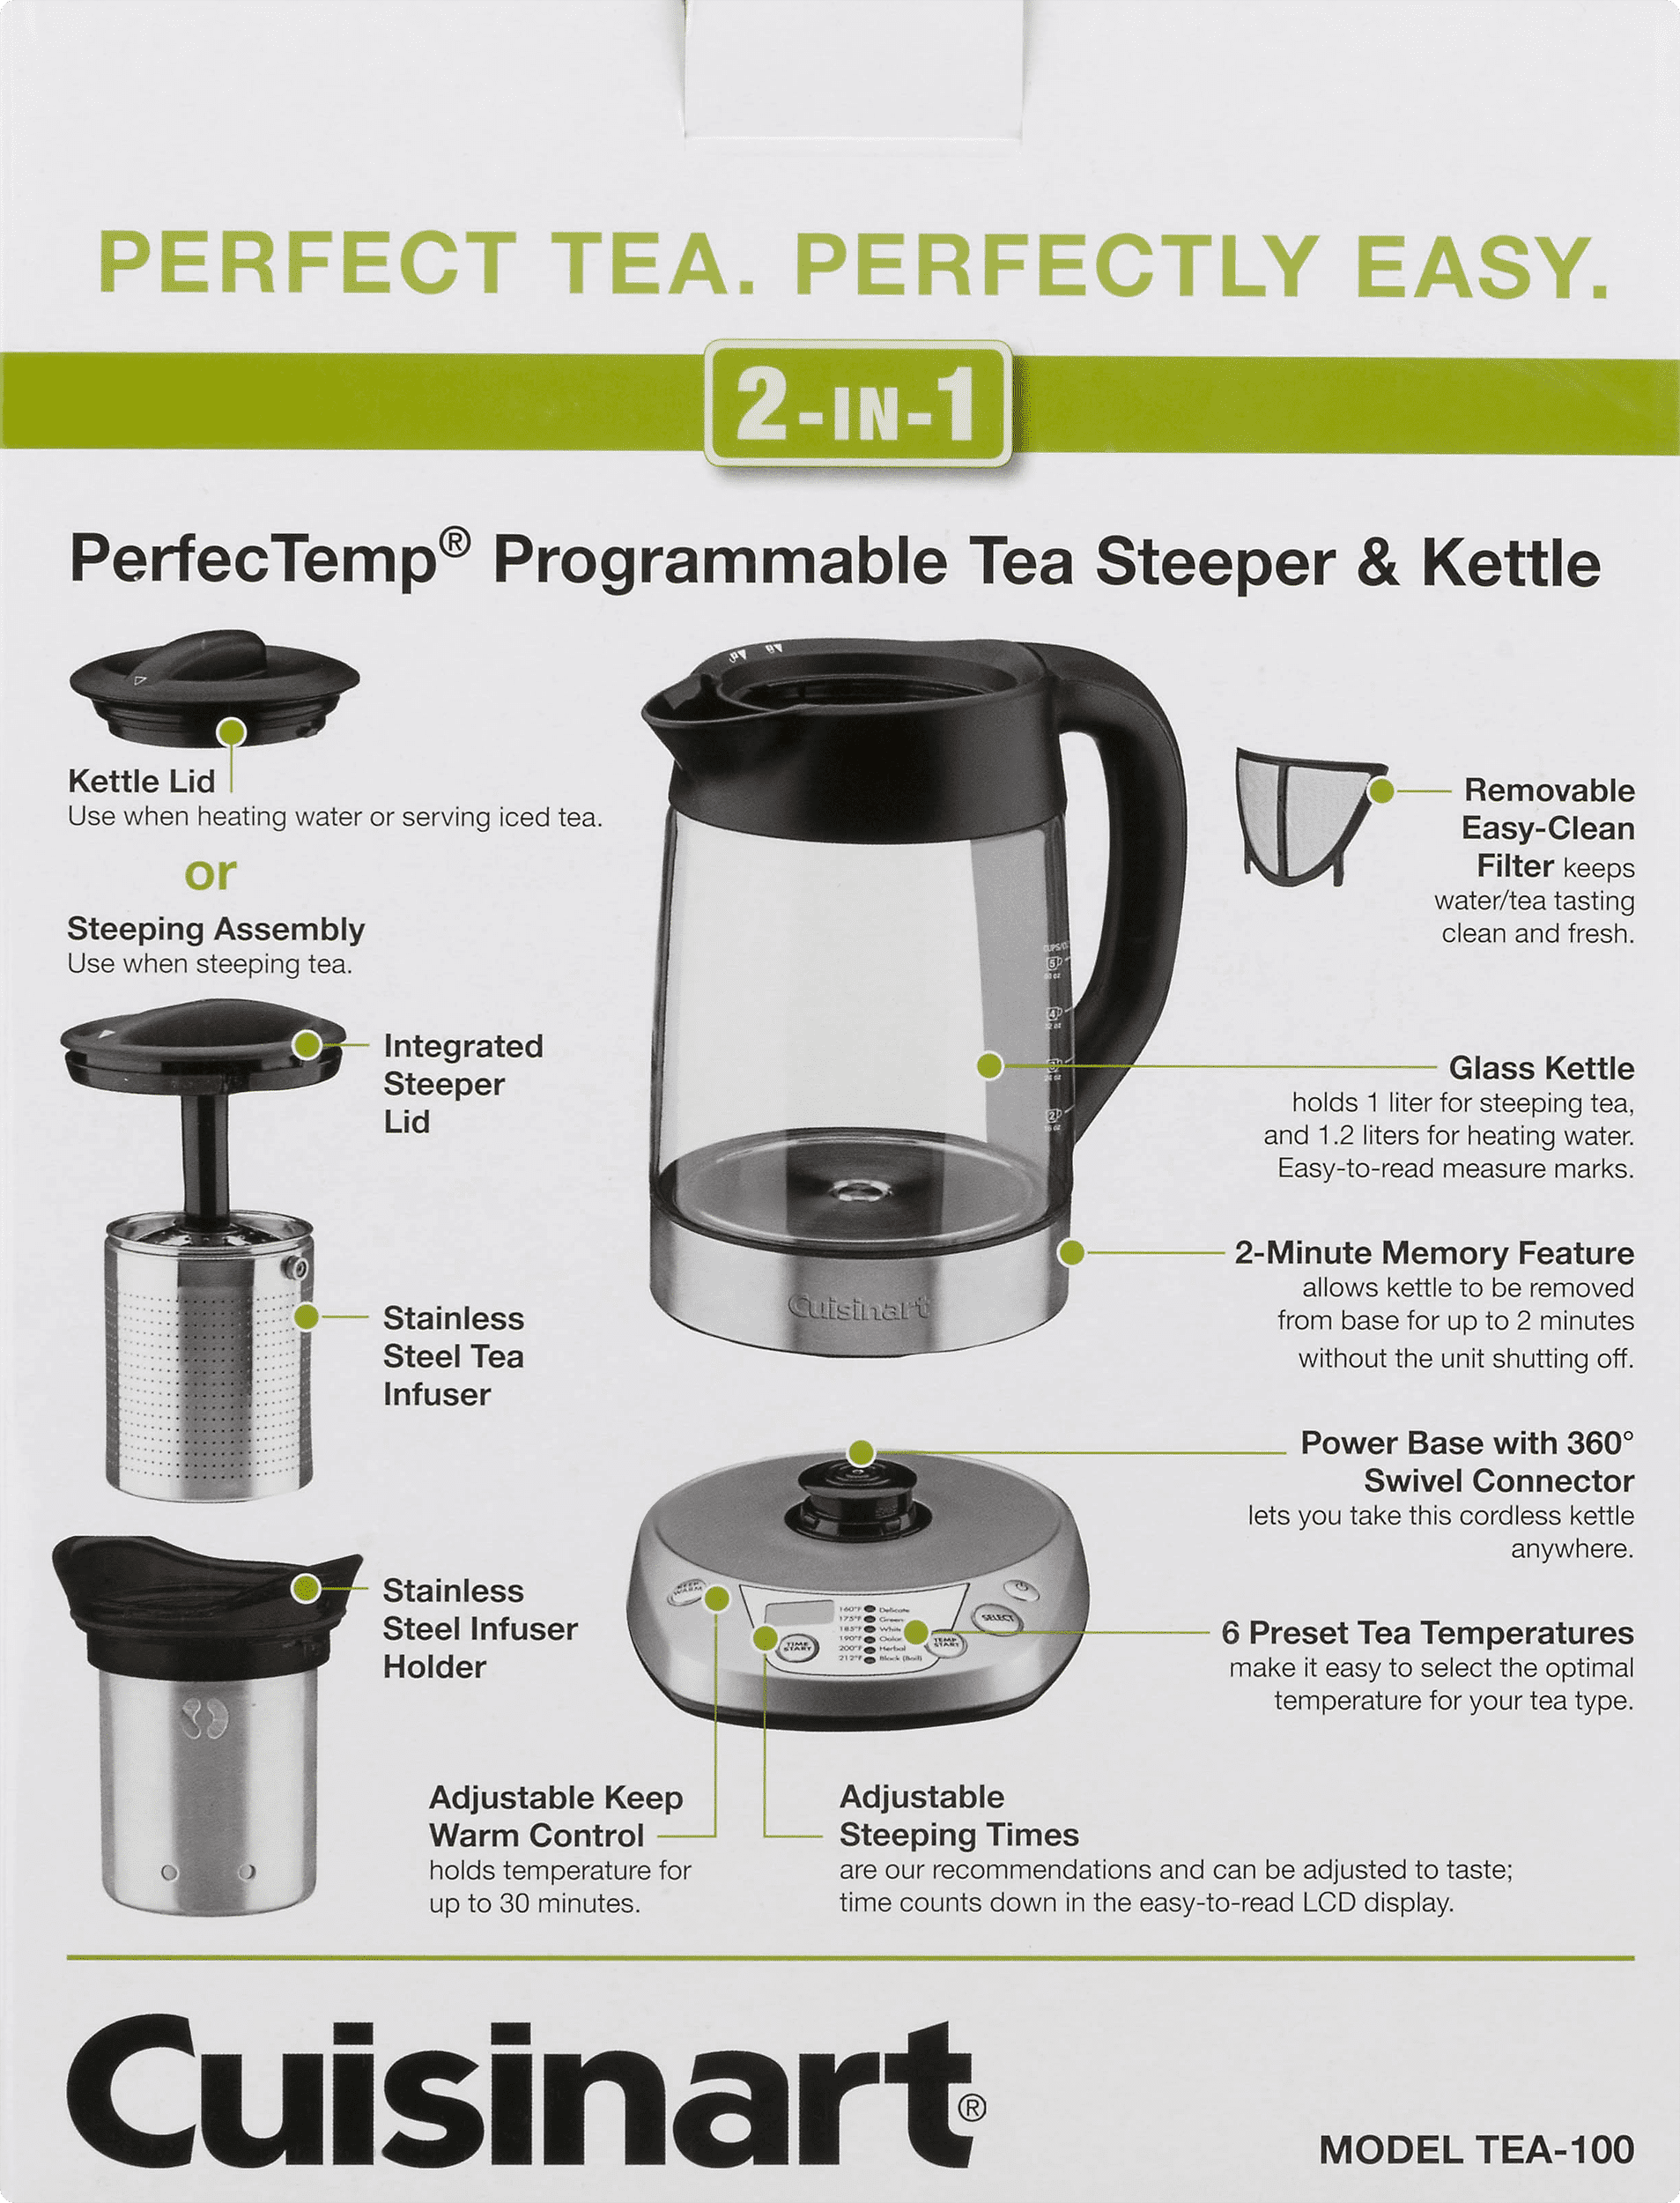 Cuisinart TEA-100 PerfecTemp Programmable Tea Steeper & Kettlec